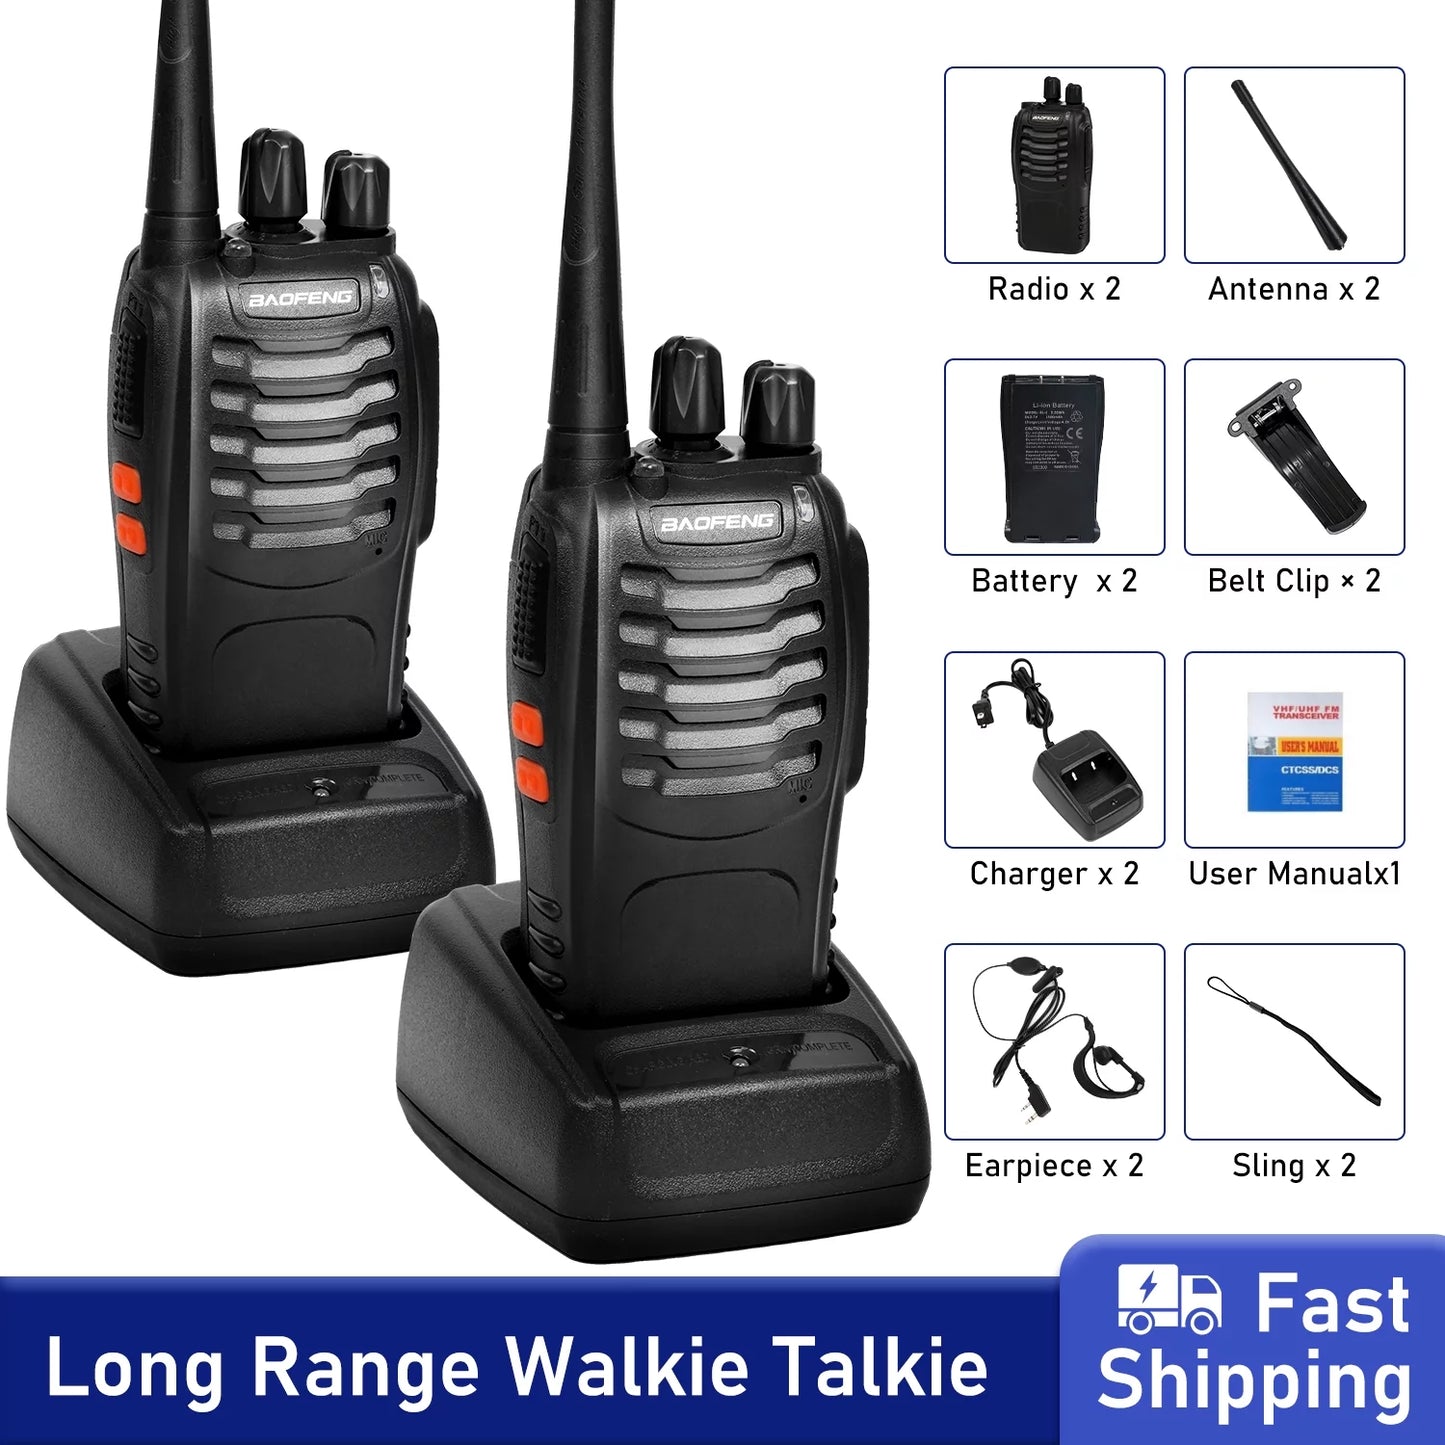 Walkie Talkies Two-Way Radios, Walkie Talkies for Adults Long Range, Rechargeable Walkie Talkie with Earpiece, LED Light 1500mAh Battery, 2 Pack Black